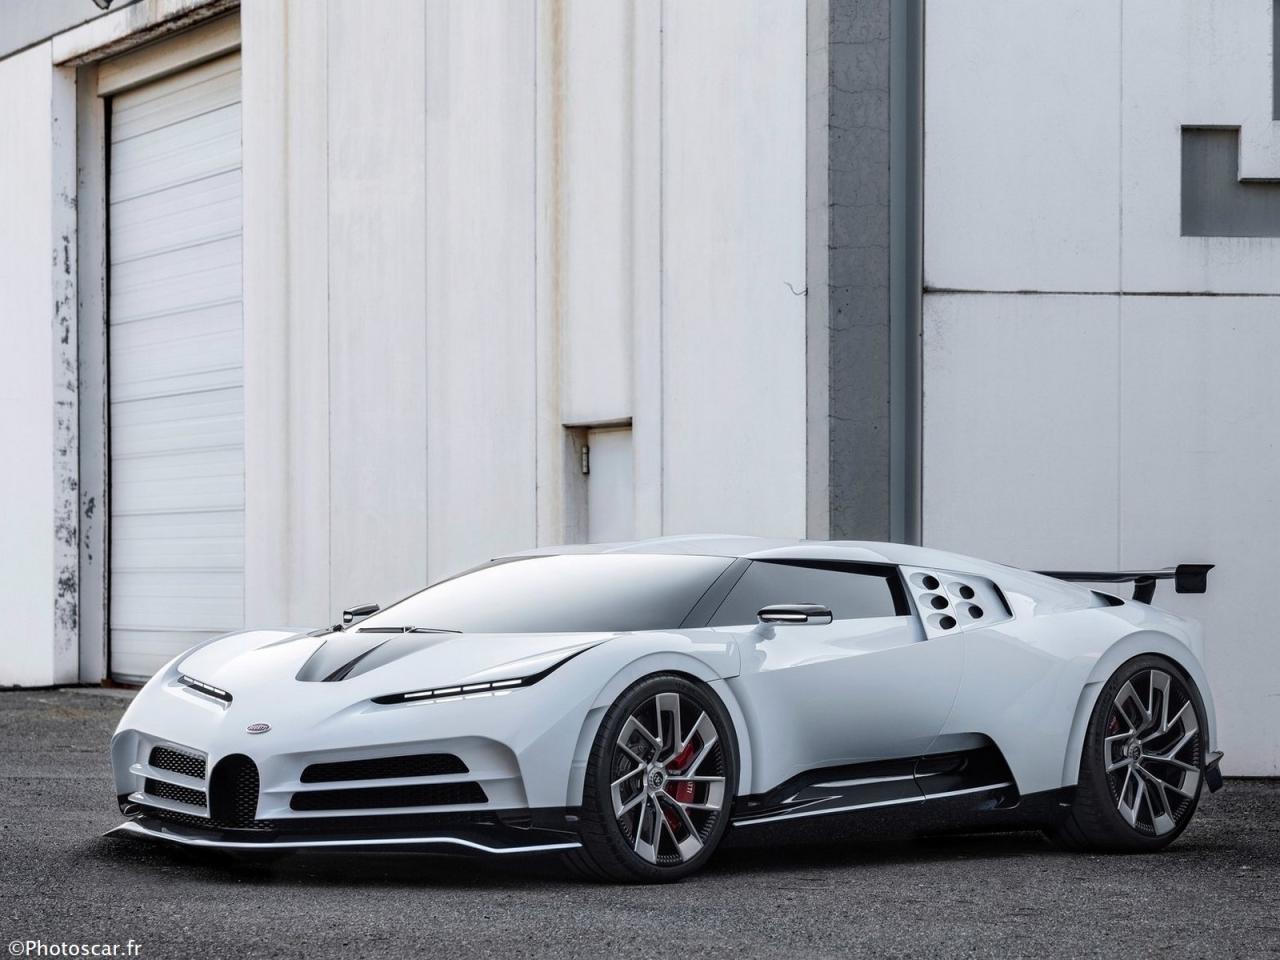 Unparalleled Luxury: Own The 2020 Bugatti Centodieci